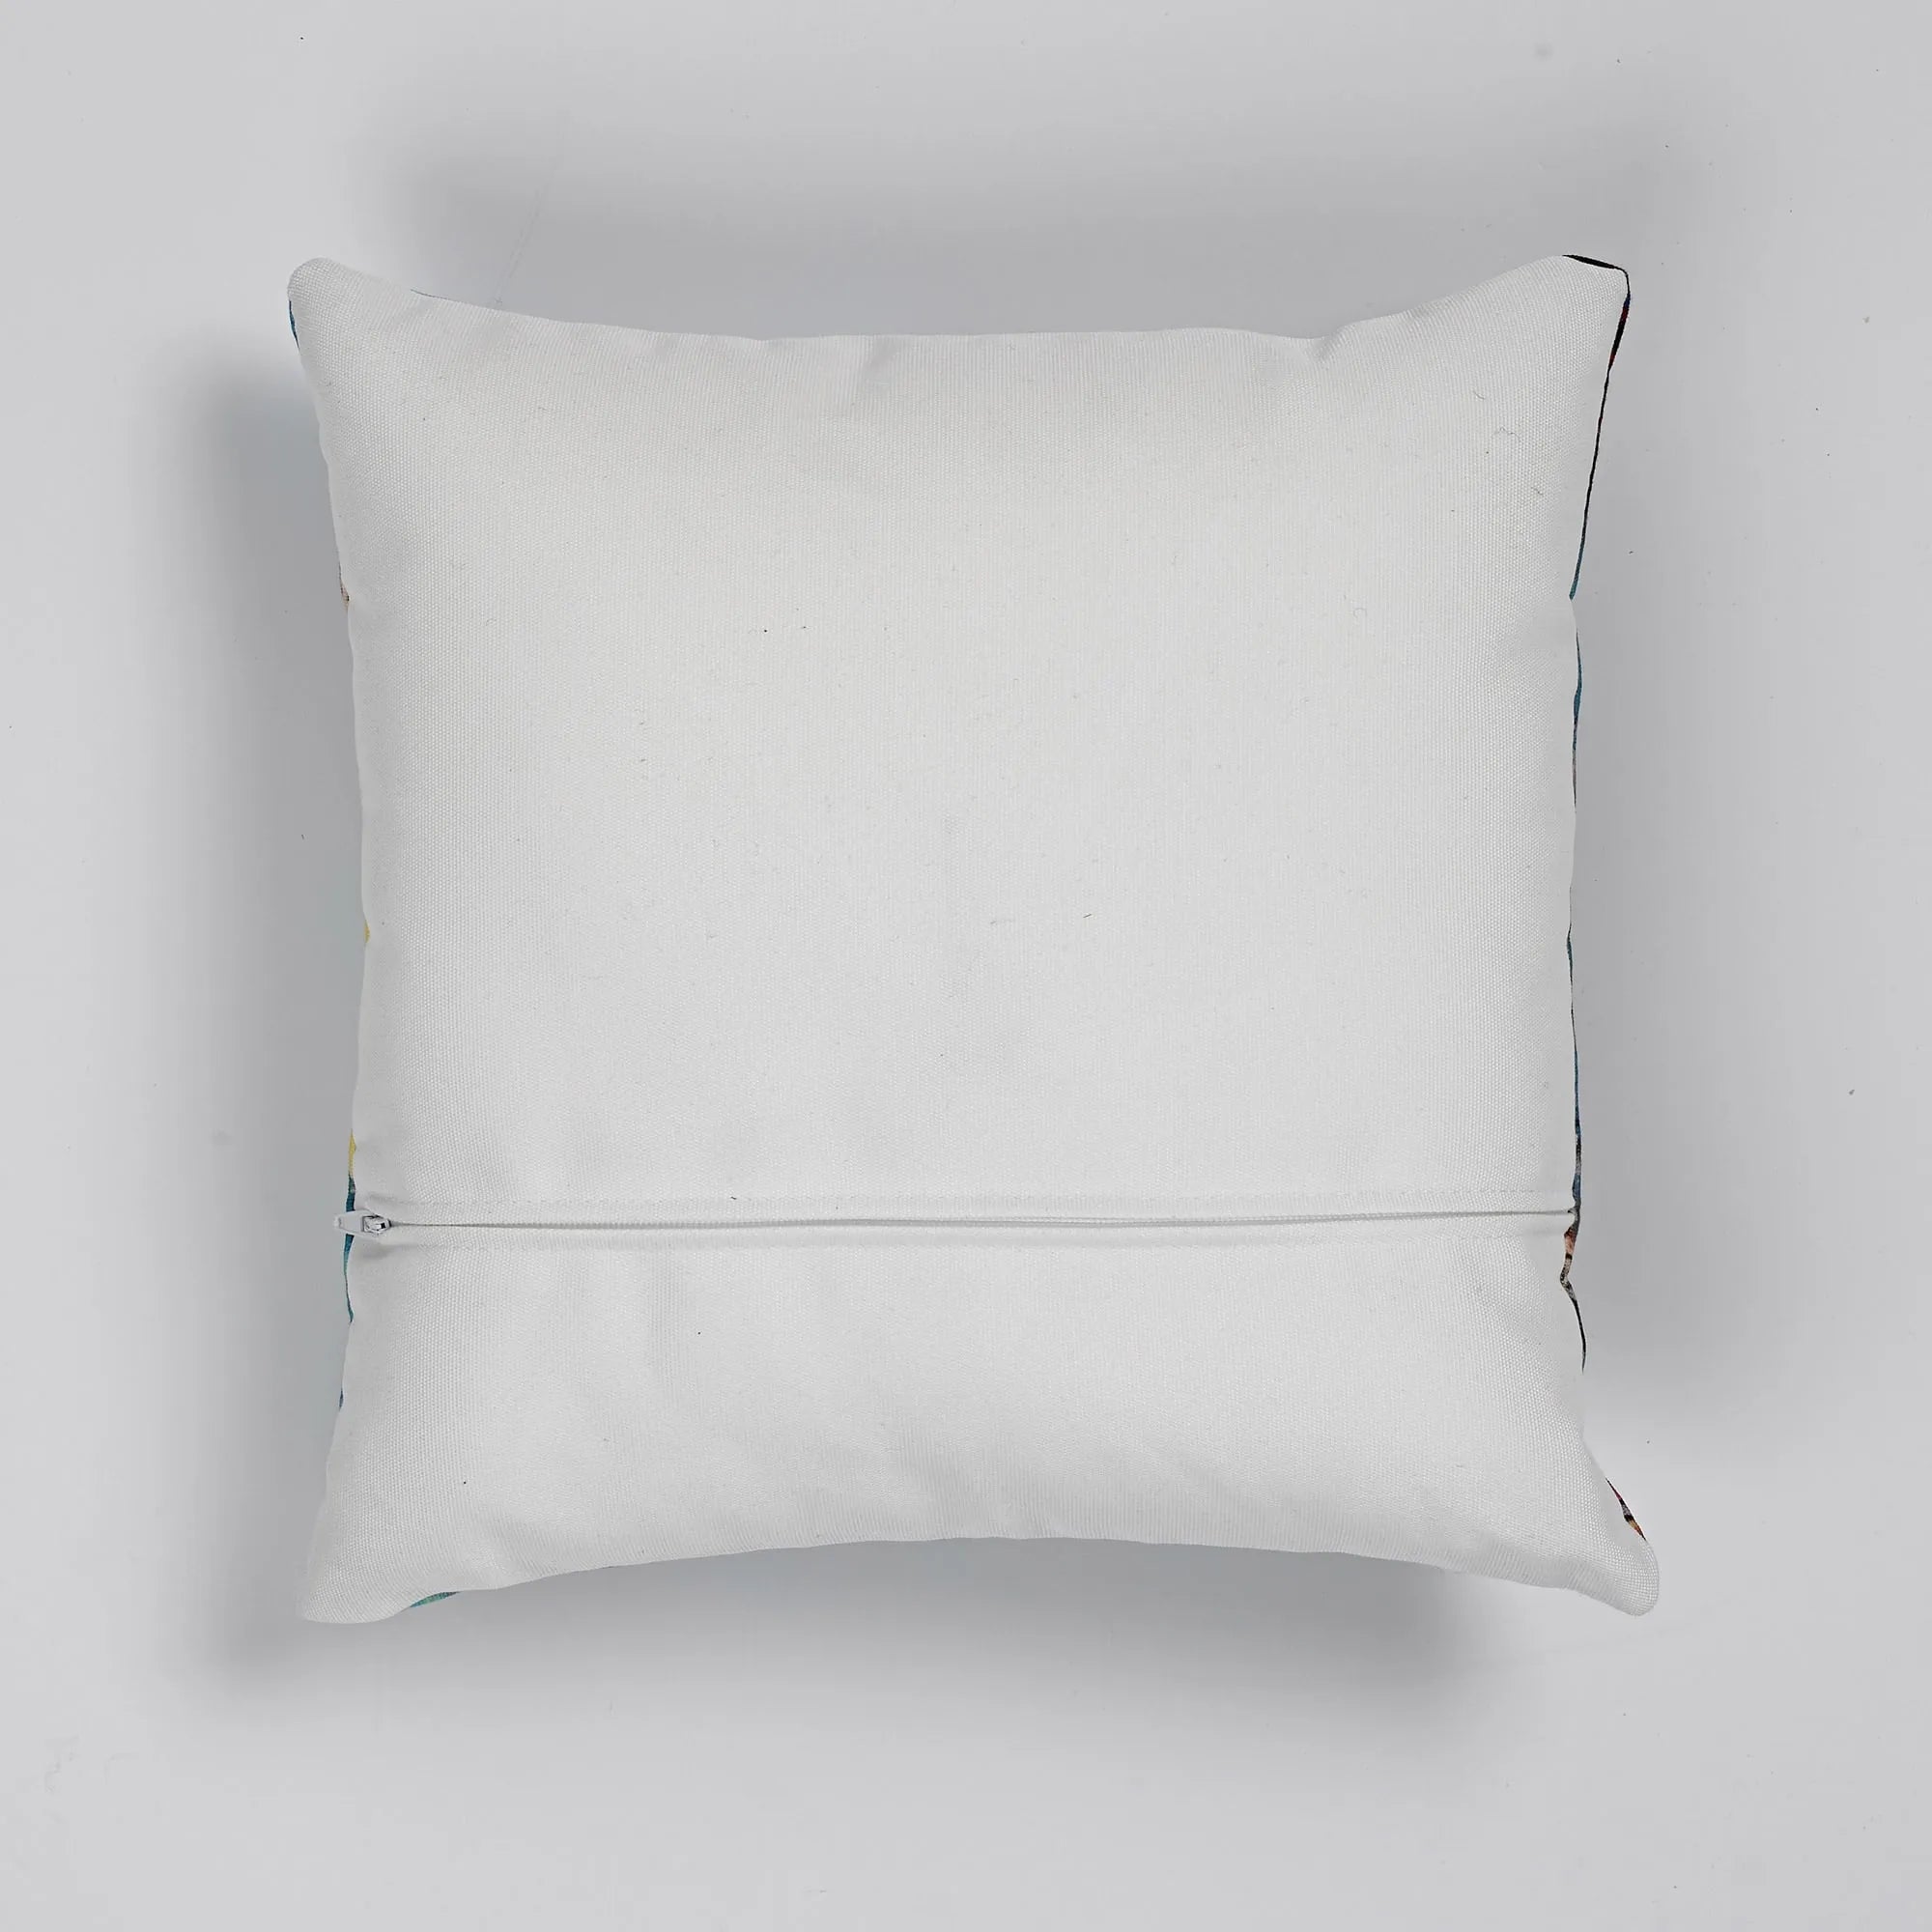 Strawberry Thief - William Morris Cushion - Decorative Throw Pillow - Throw Pillows - Aesthetic Art